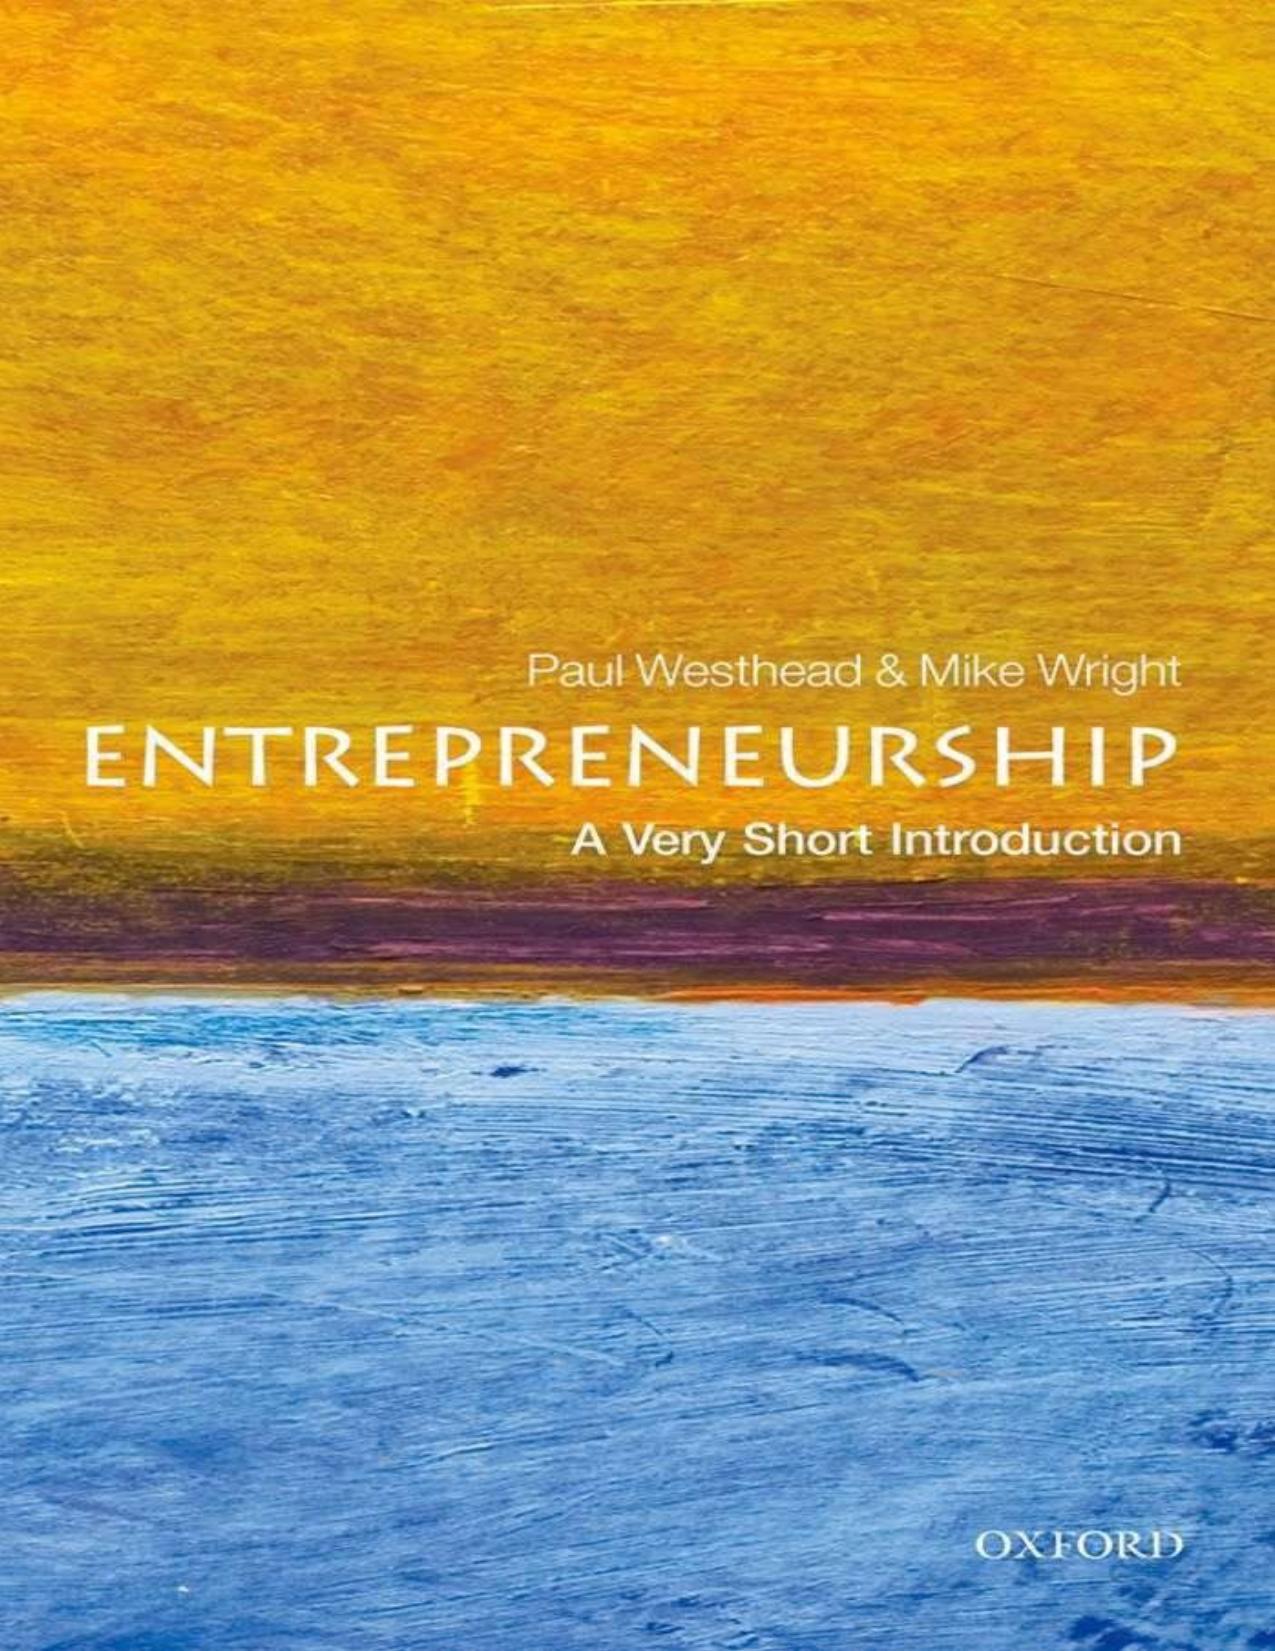 Entrepreneurship: A Very Short Introduction - PDFDrive.com